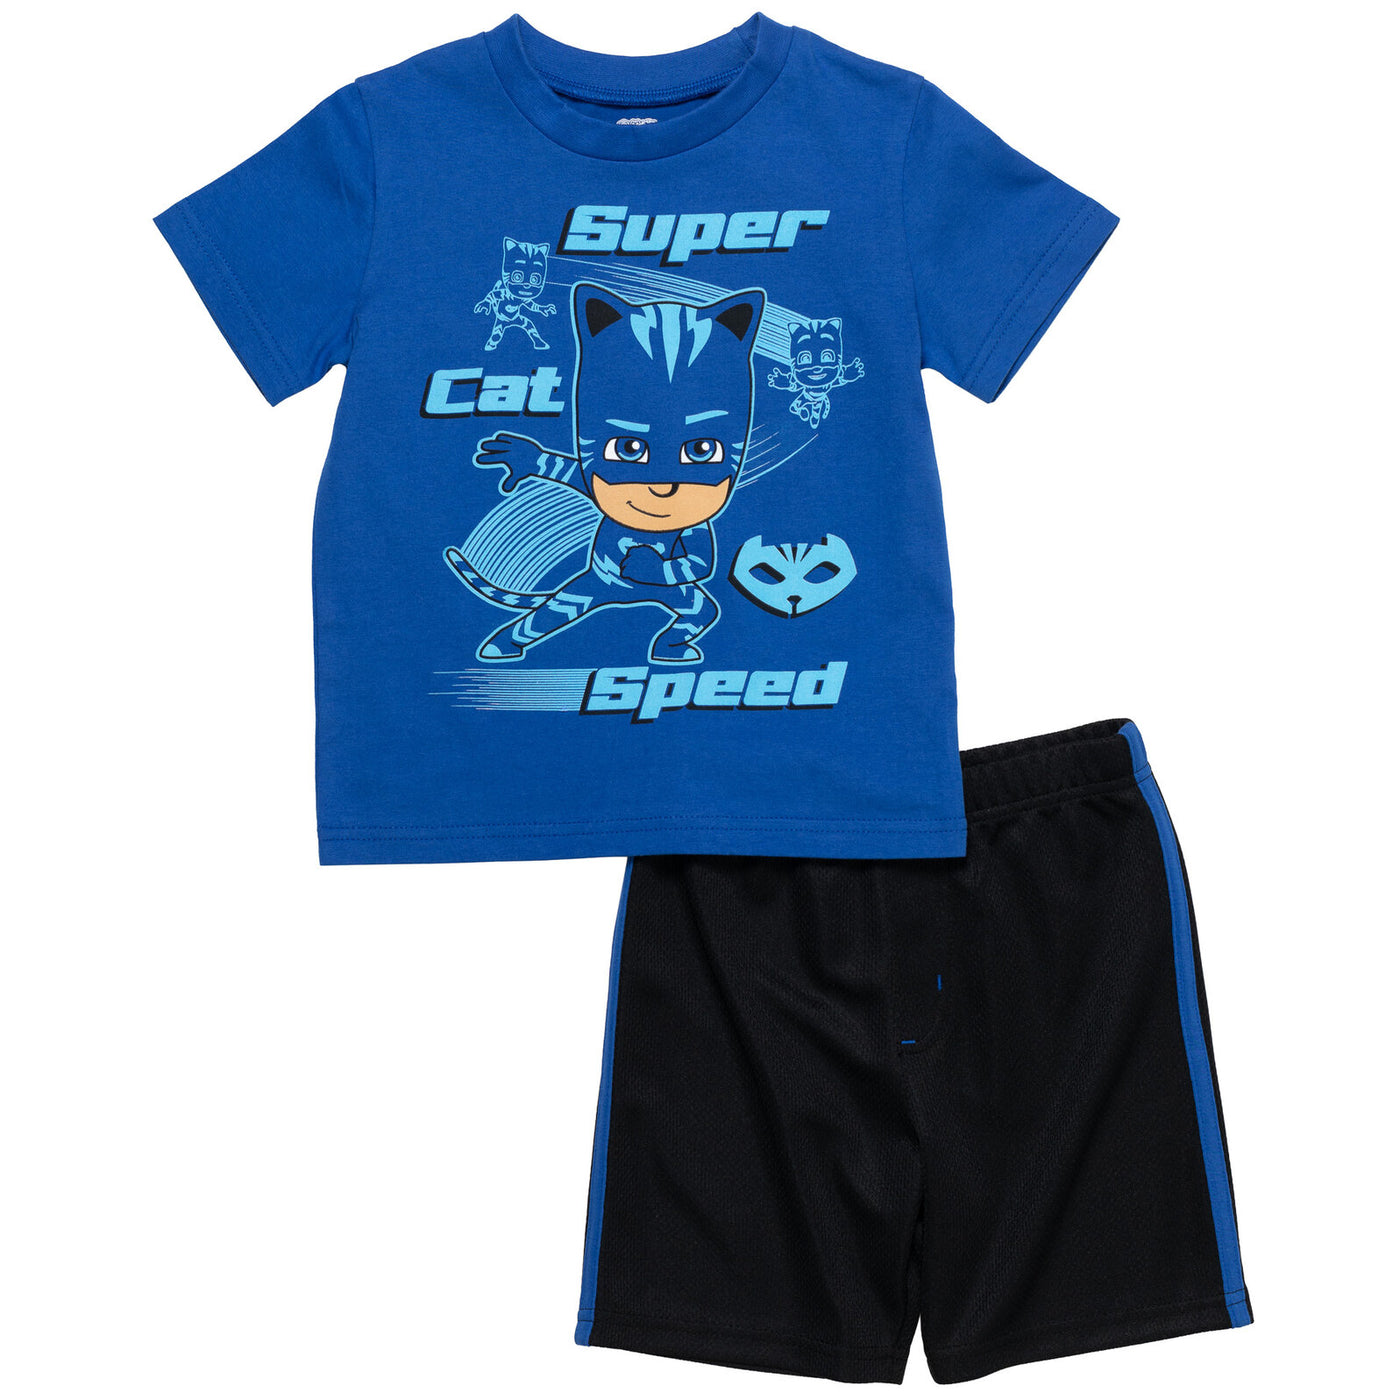 PJ Masks Catboy T-Shirt and Mesh Shorts Outfit Set